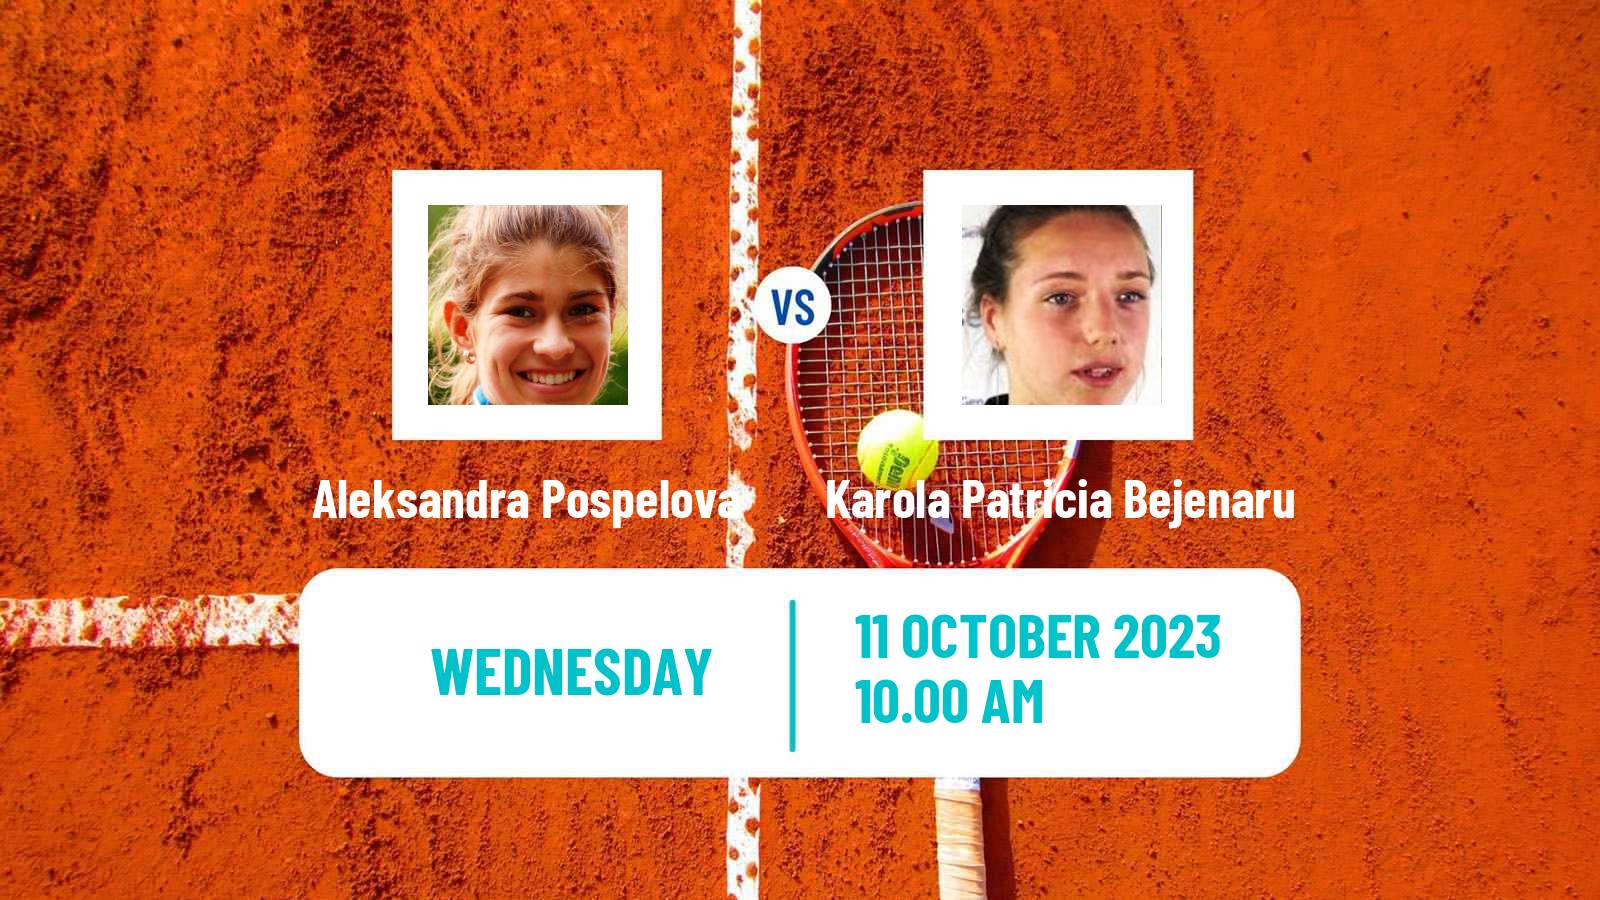 Tennis ITF W15 Sharm Elsheikh 14 Women Aleksandra Pospelova - Karola Patricia Bejenaru